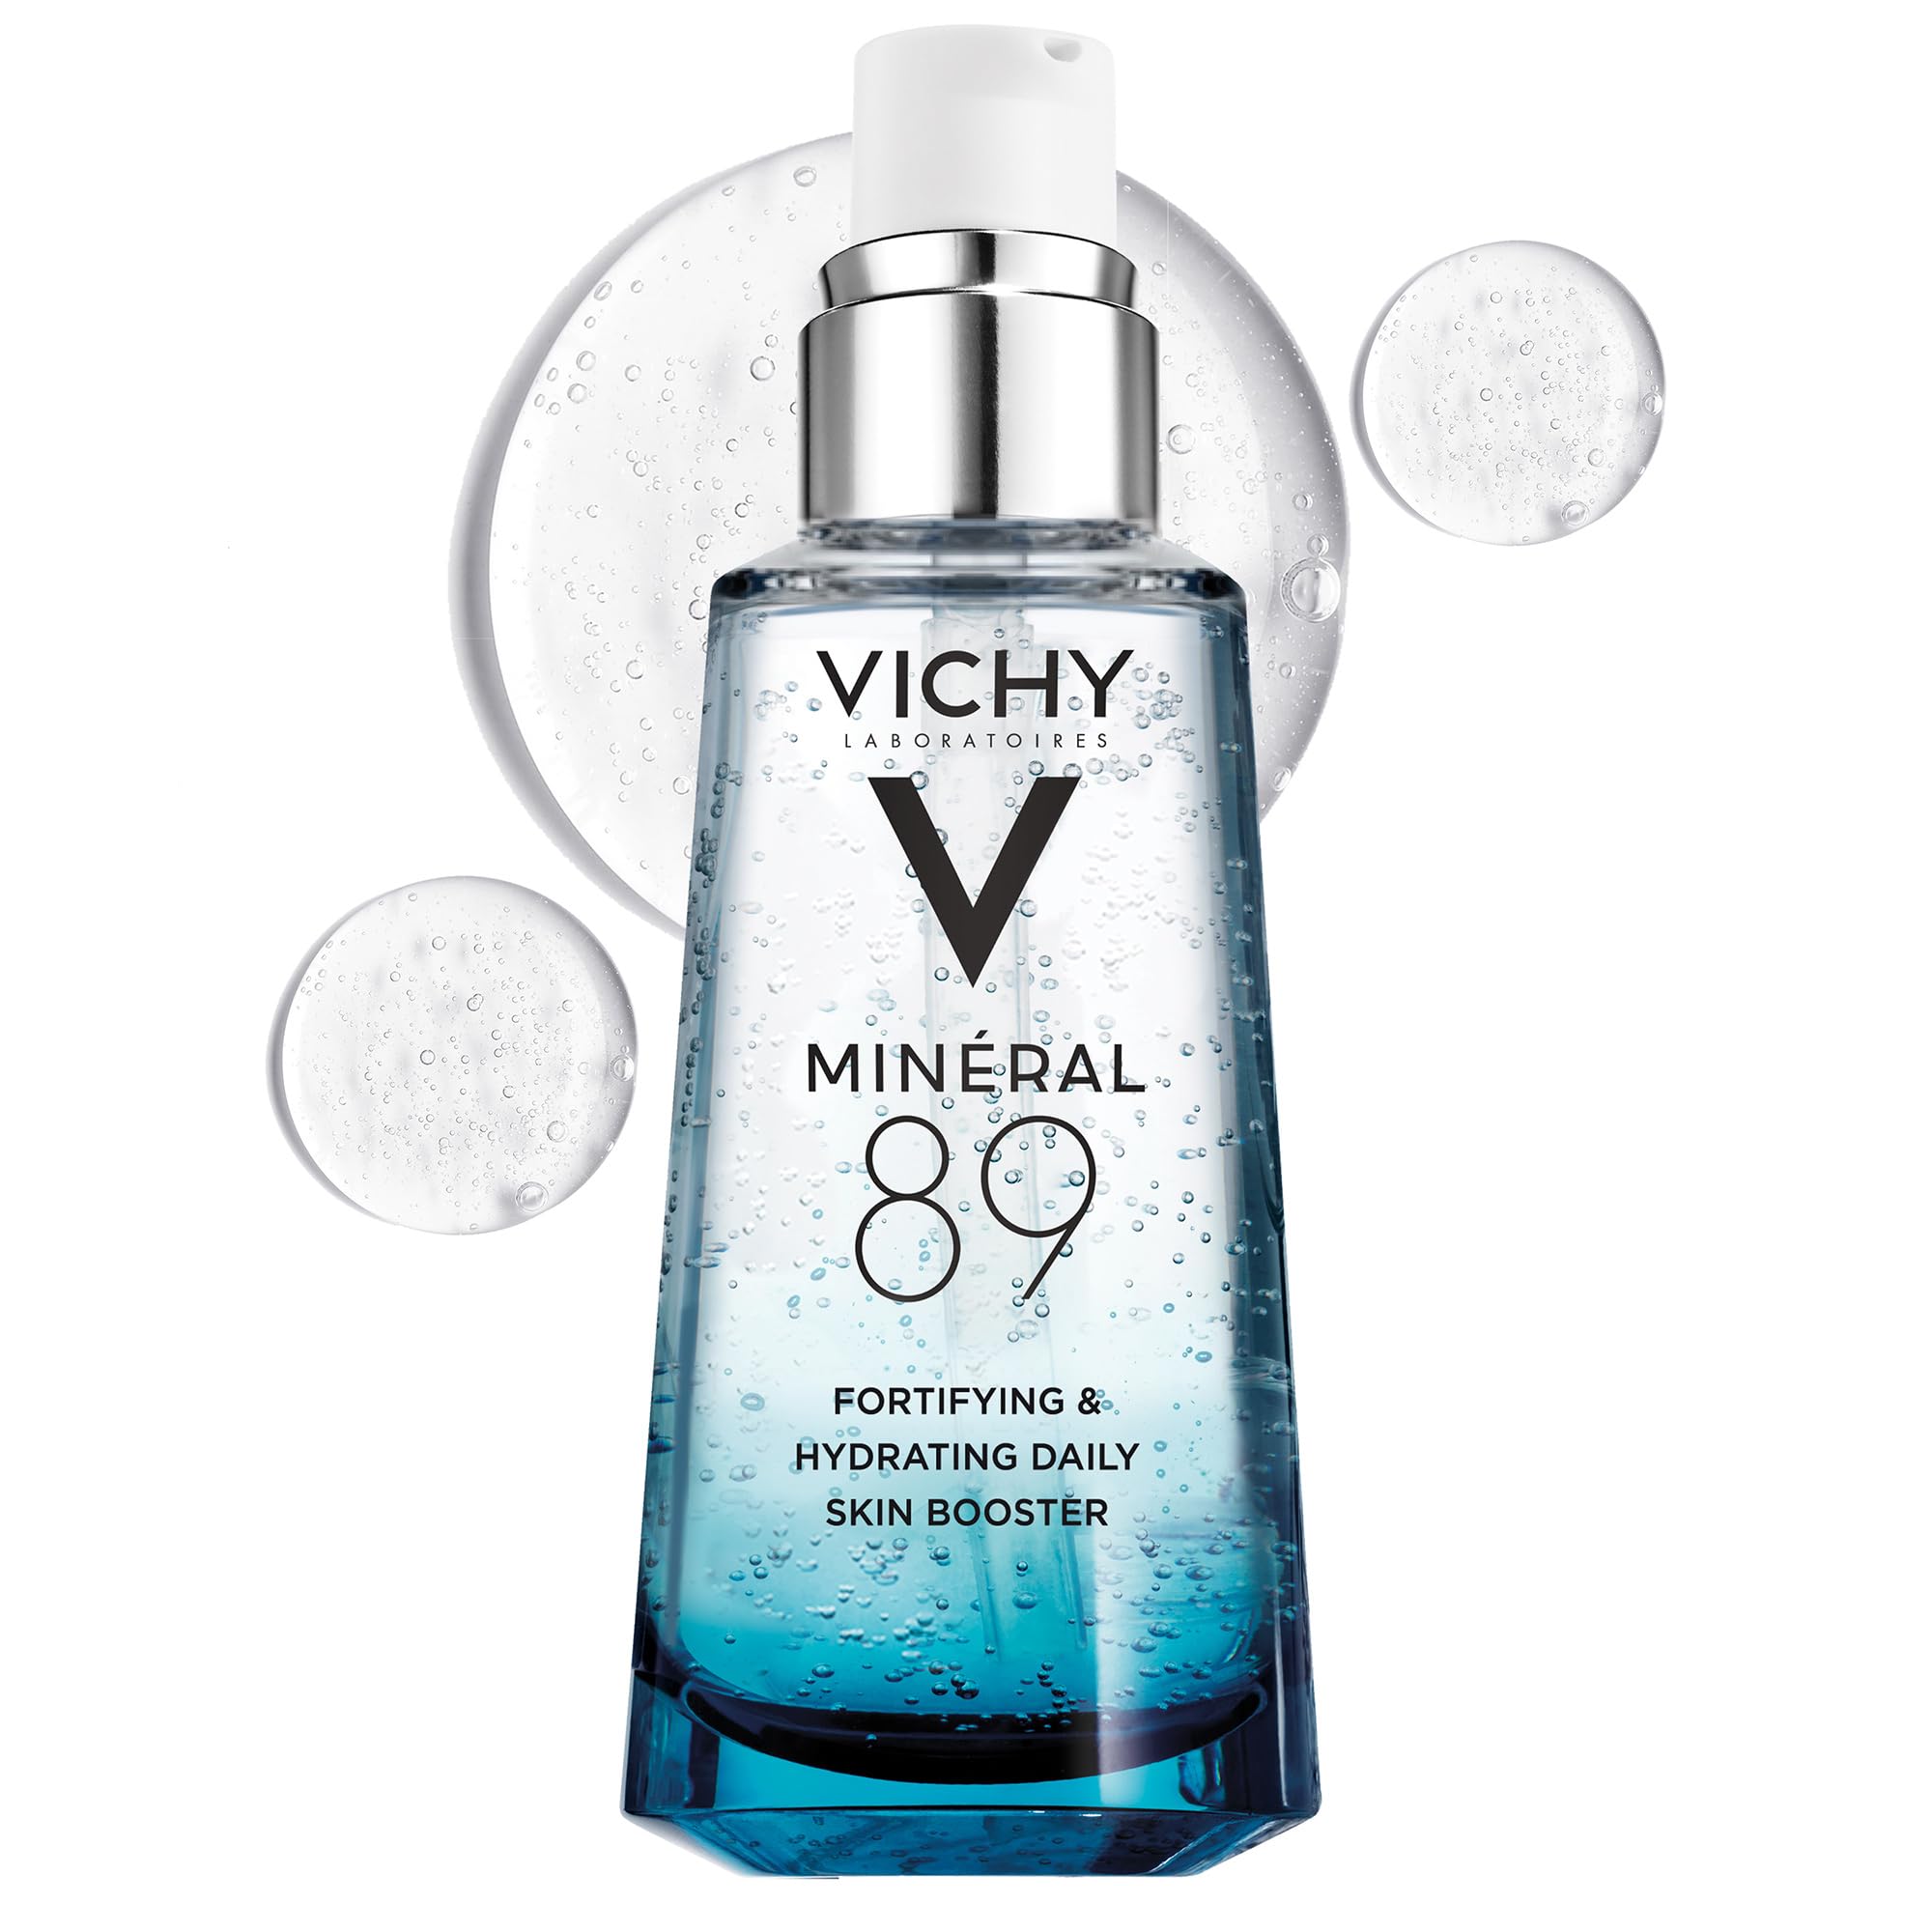  Vichy ミネラル89フェイスセラム |敏感肌と乾燥肌のためのフェイシャル ジェル モイスチャライザーとピュア ヒアルロン酸の保湿および水分補給セラム...